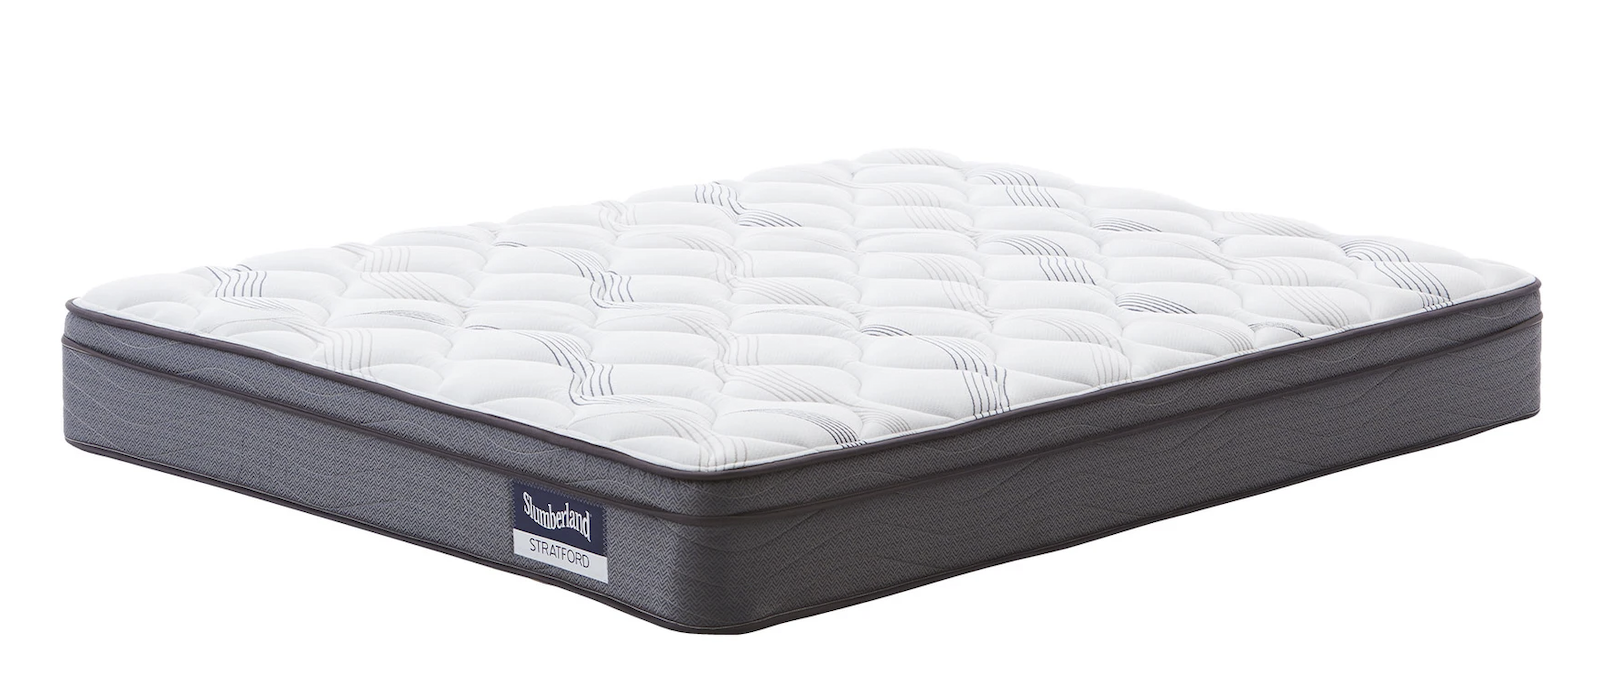 slumberland stratford mattress medium review